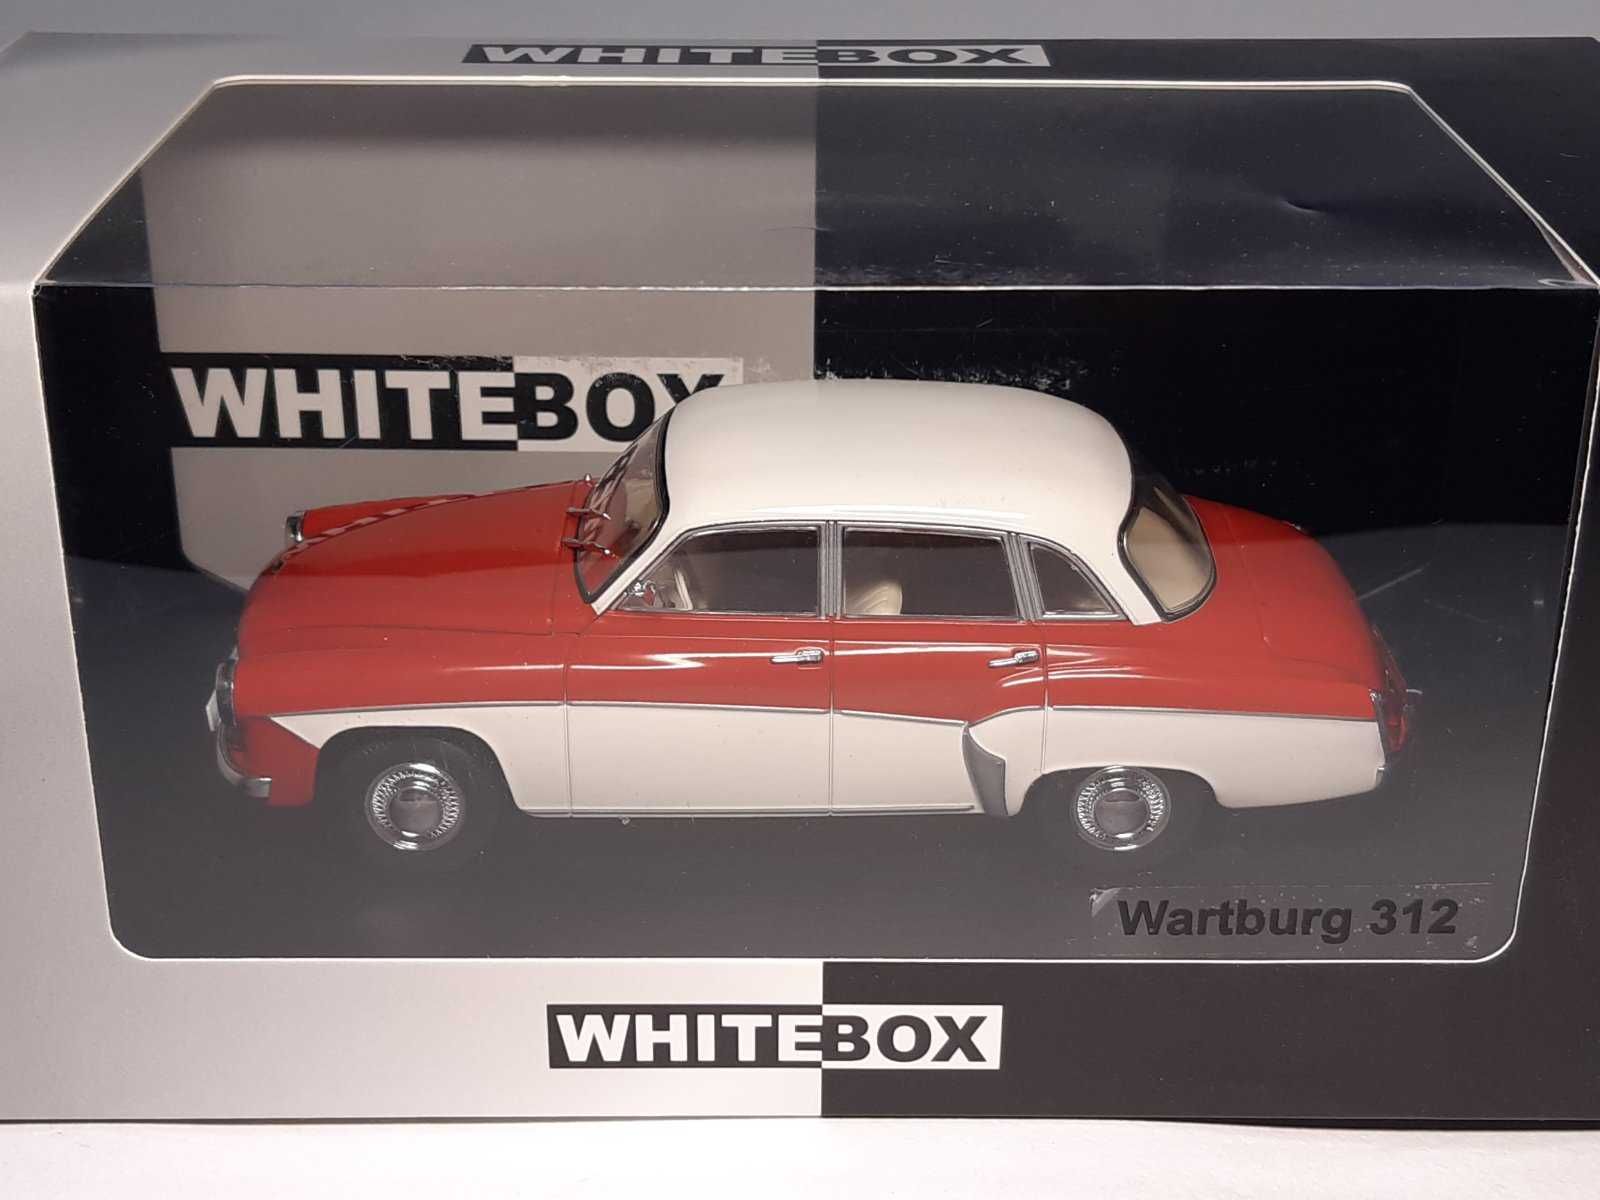 Модель WhiteBox 1/24 масштаб - Wartburg-312, Renault -16 (1965)